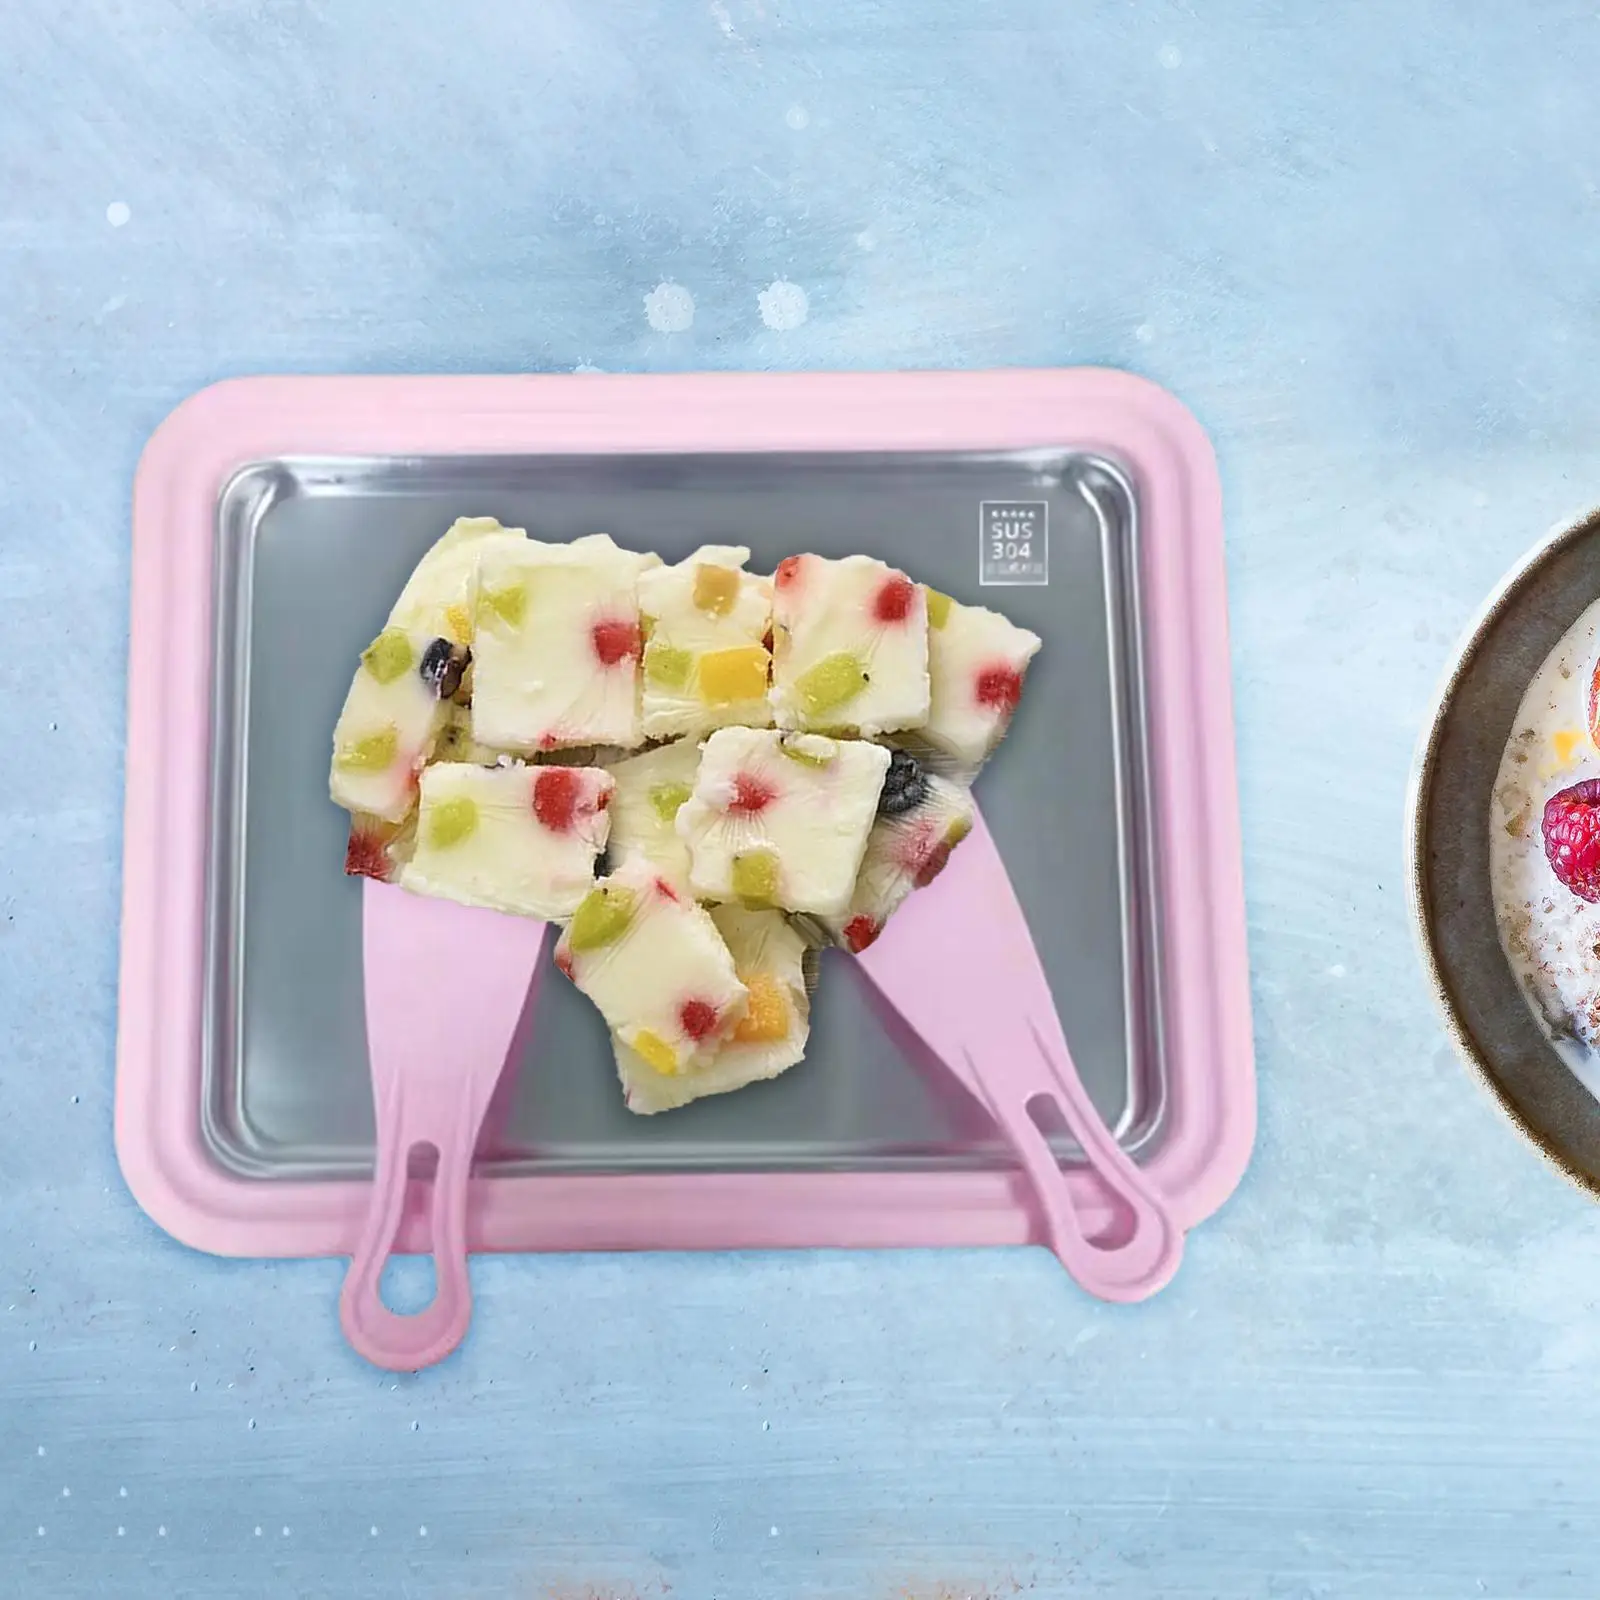 Ice Cream Pan Sweet Spot Pan Freezer Pan Practical Homemade DIY Rolled Cream Freeze Yogurt for Parties Kids Home Holiday